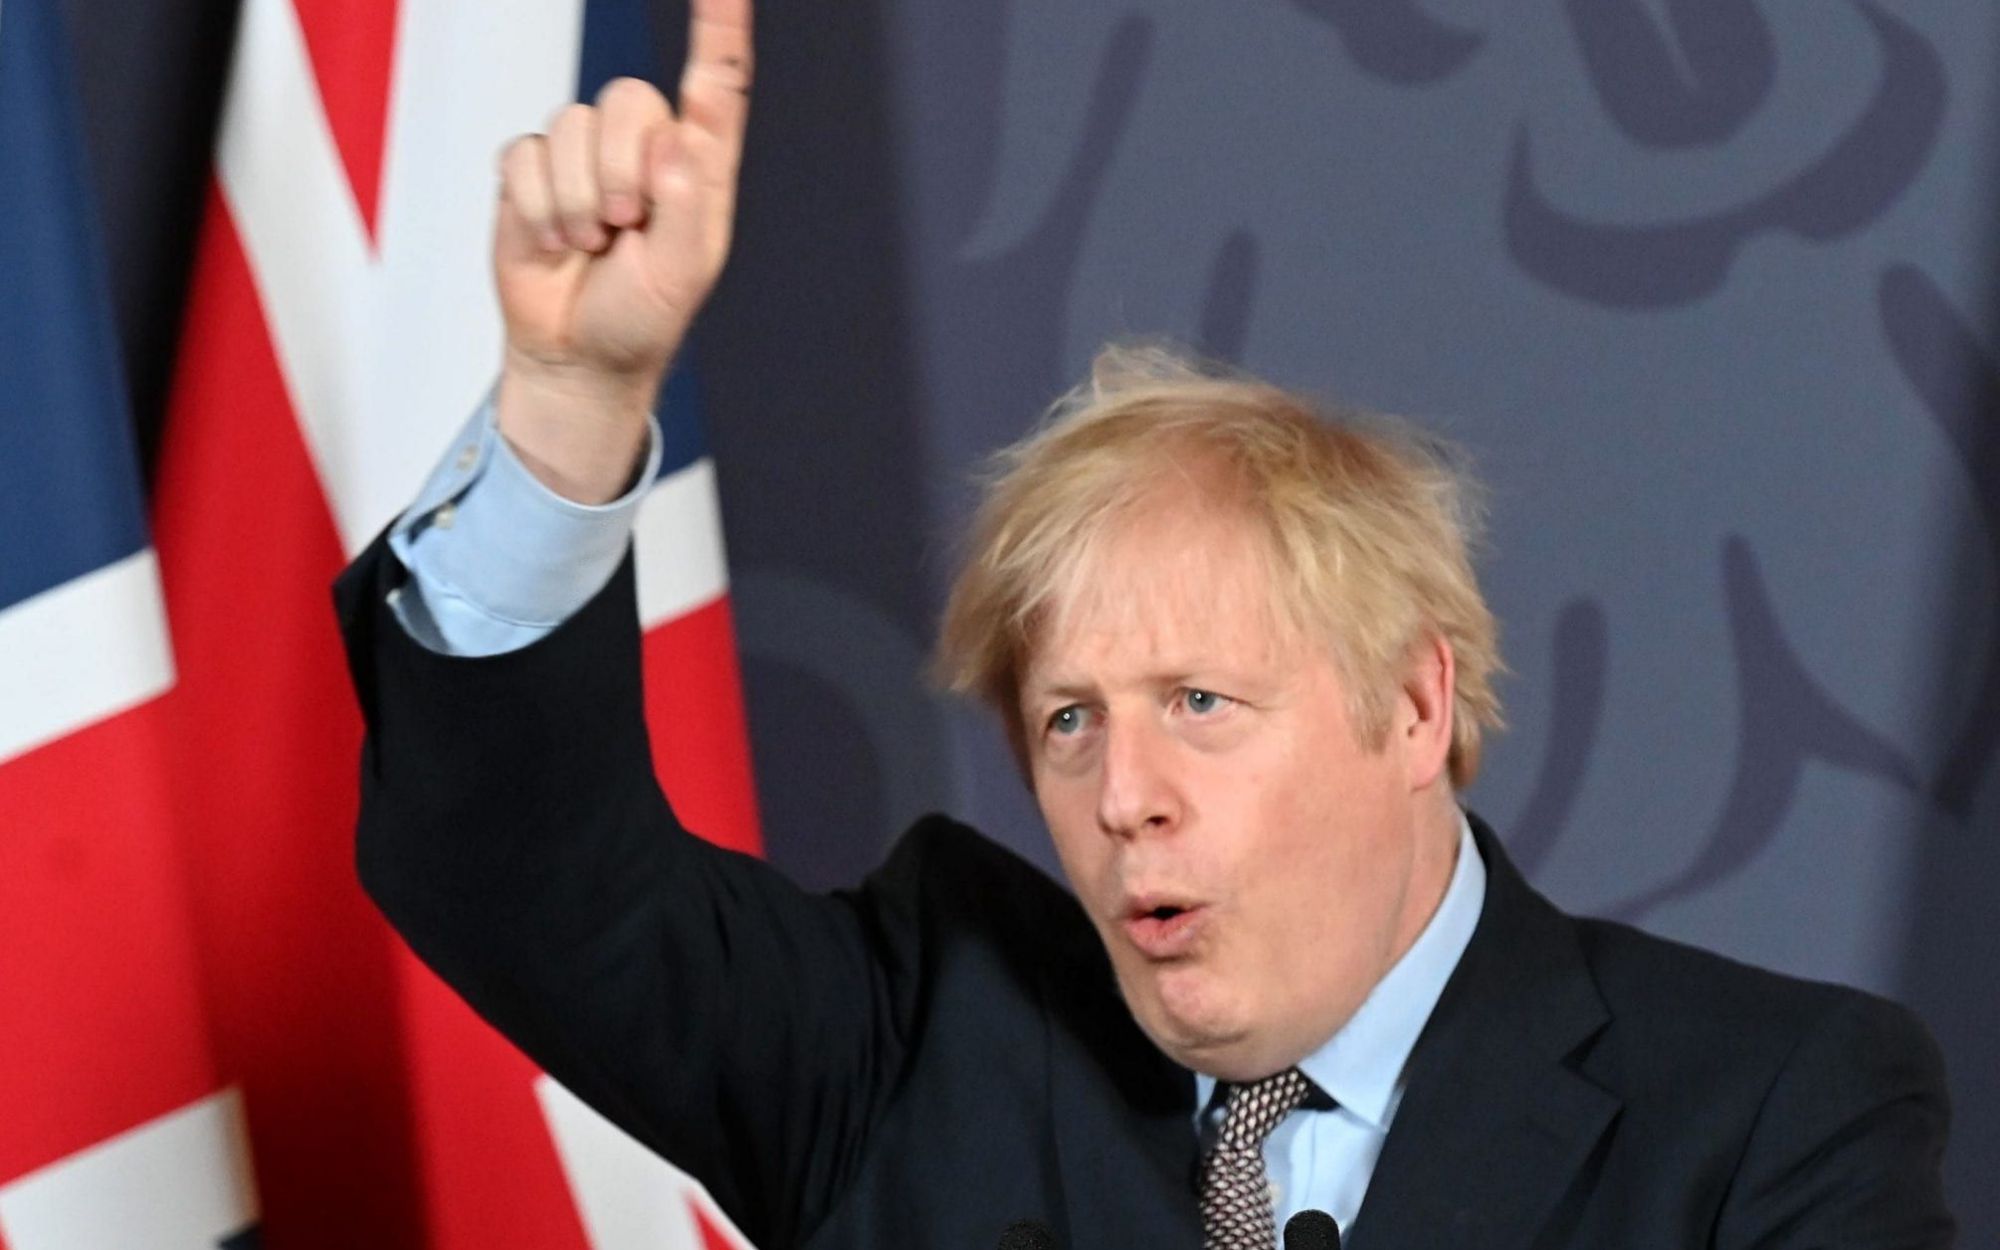 Pressure builds on Boris Johnson to allow more scrutiny of EU-UK deal